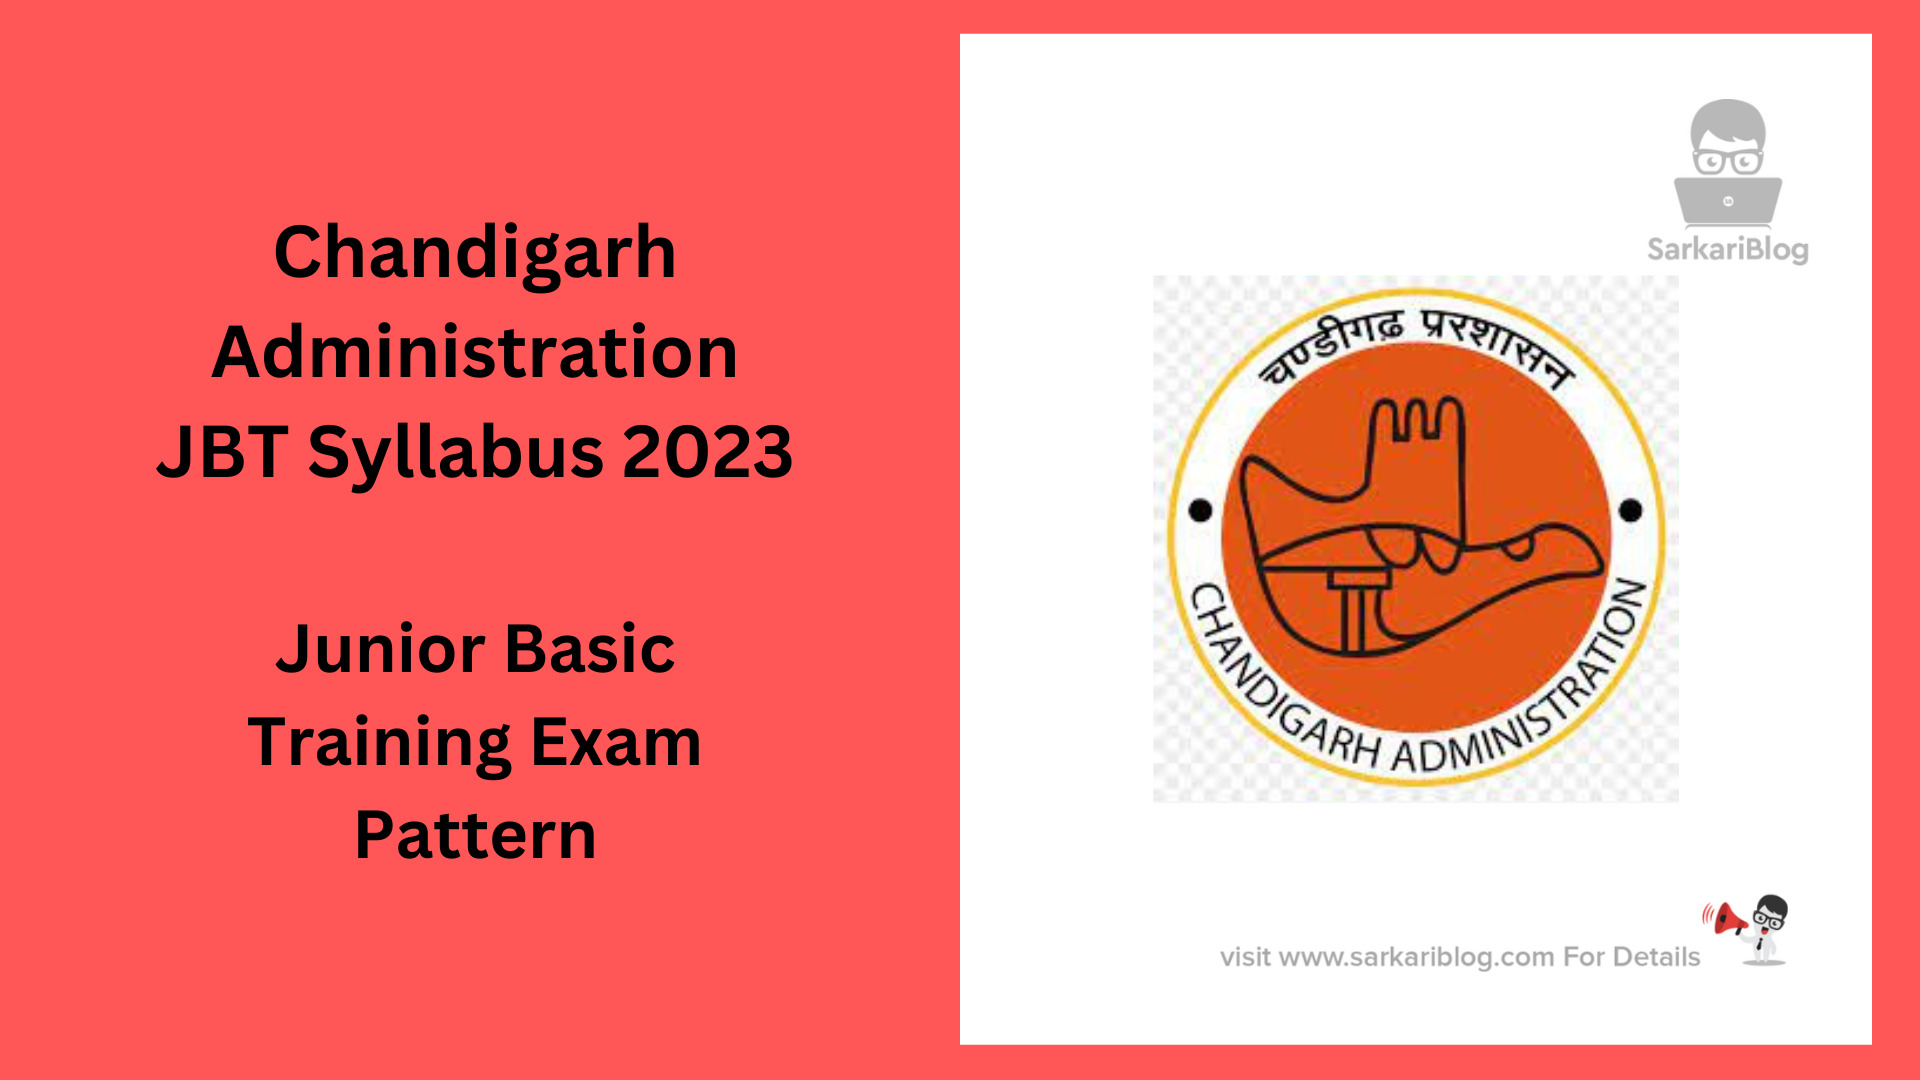 Chandigarh Administration JBT Syllabus 2023